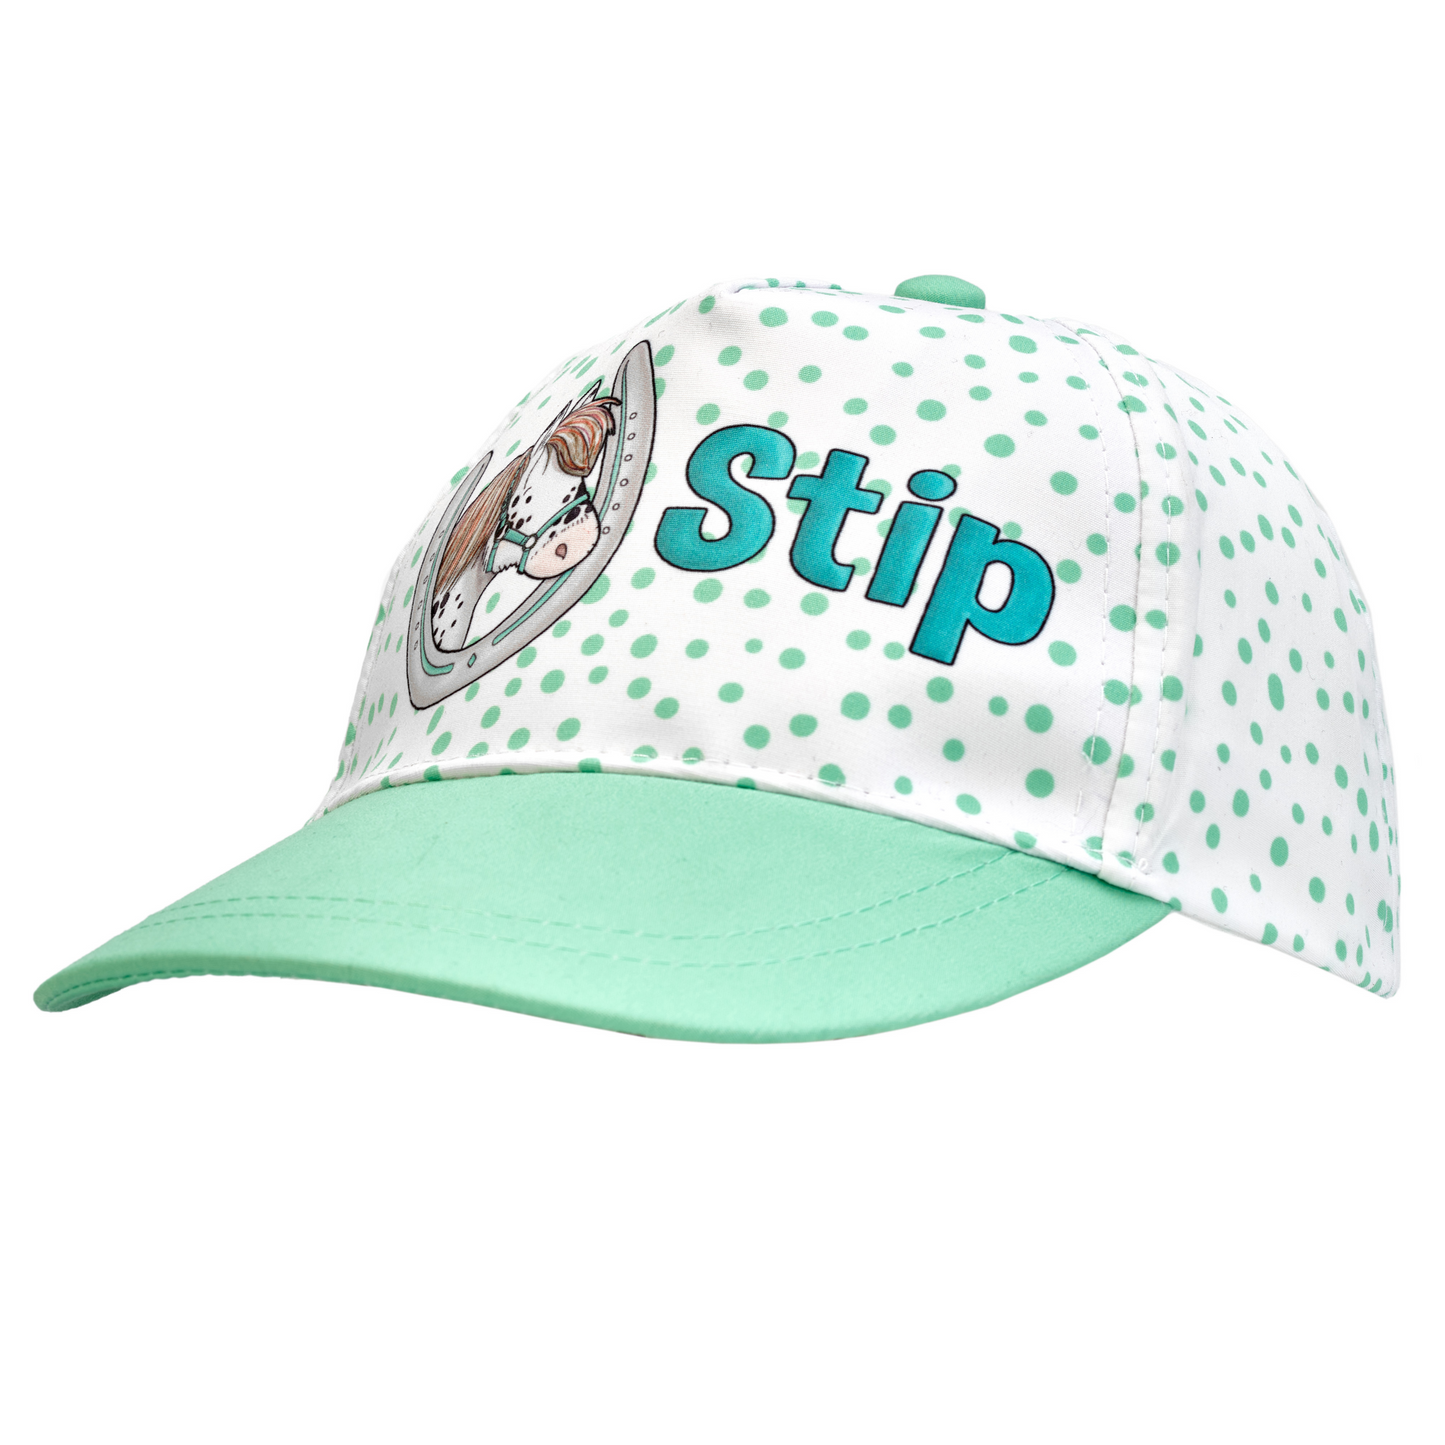 Stip the Pony - Cap - Green